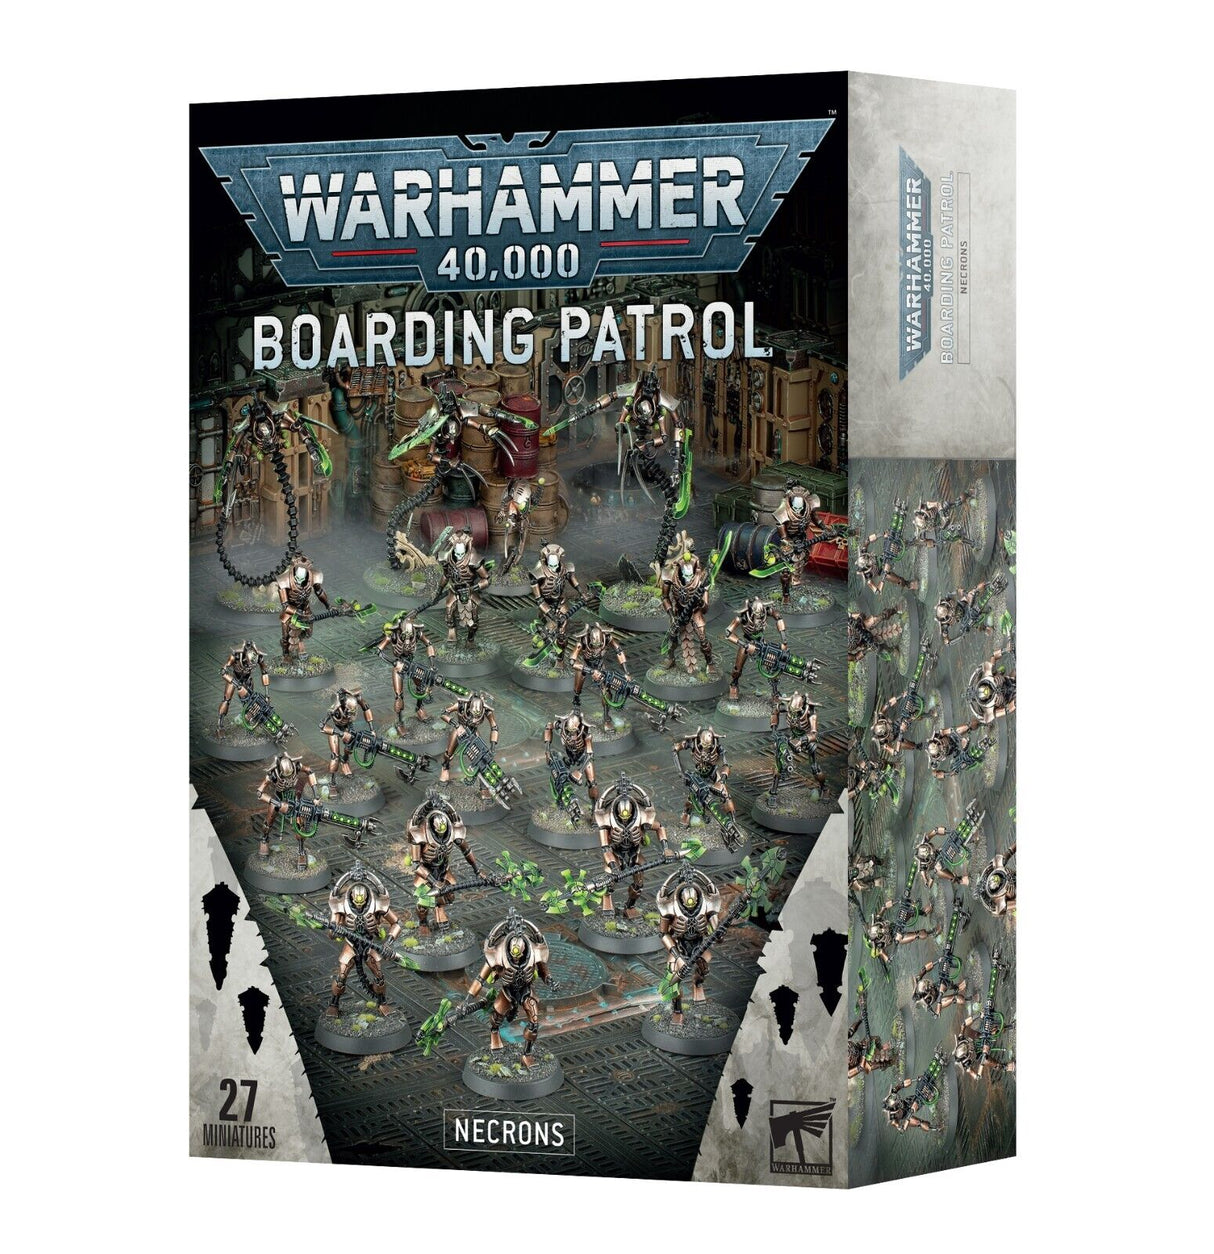 Warhammer 40,000: Boarding Patrol - Necrons